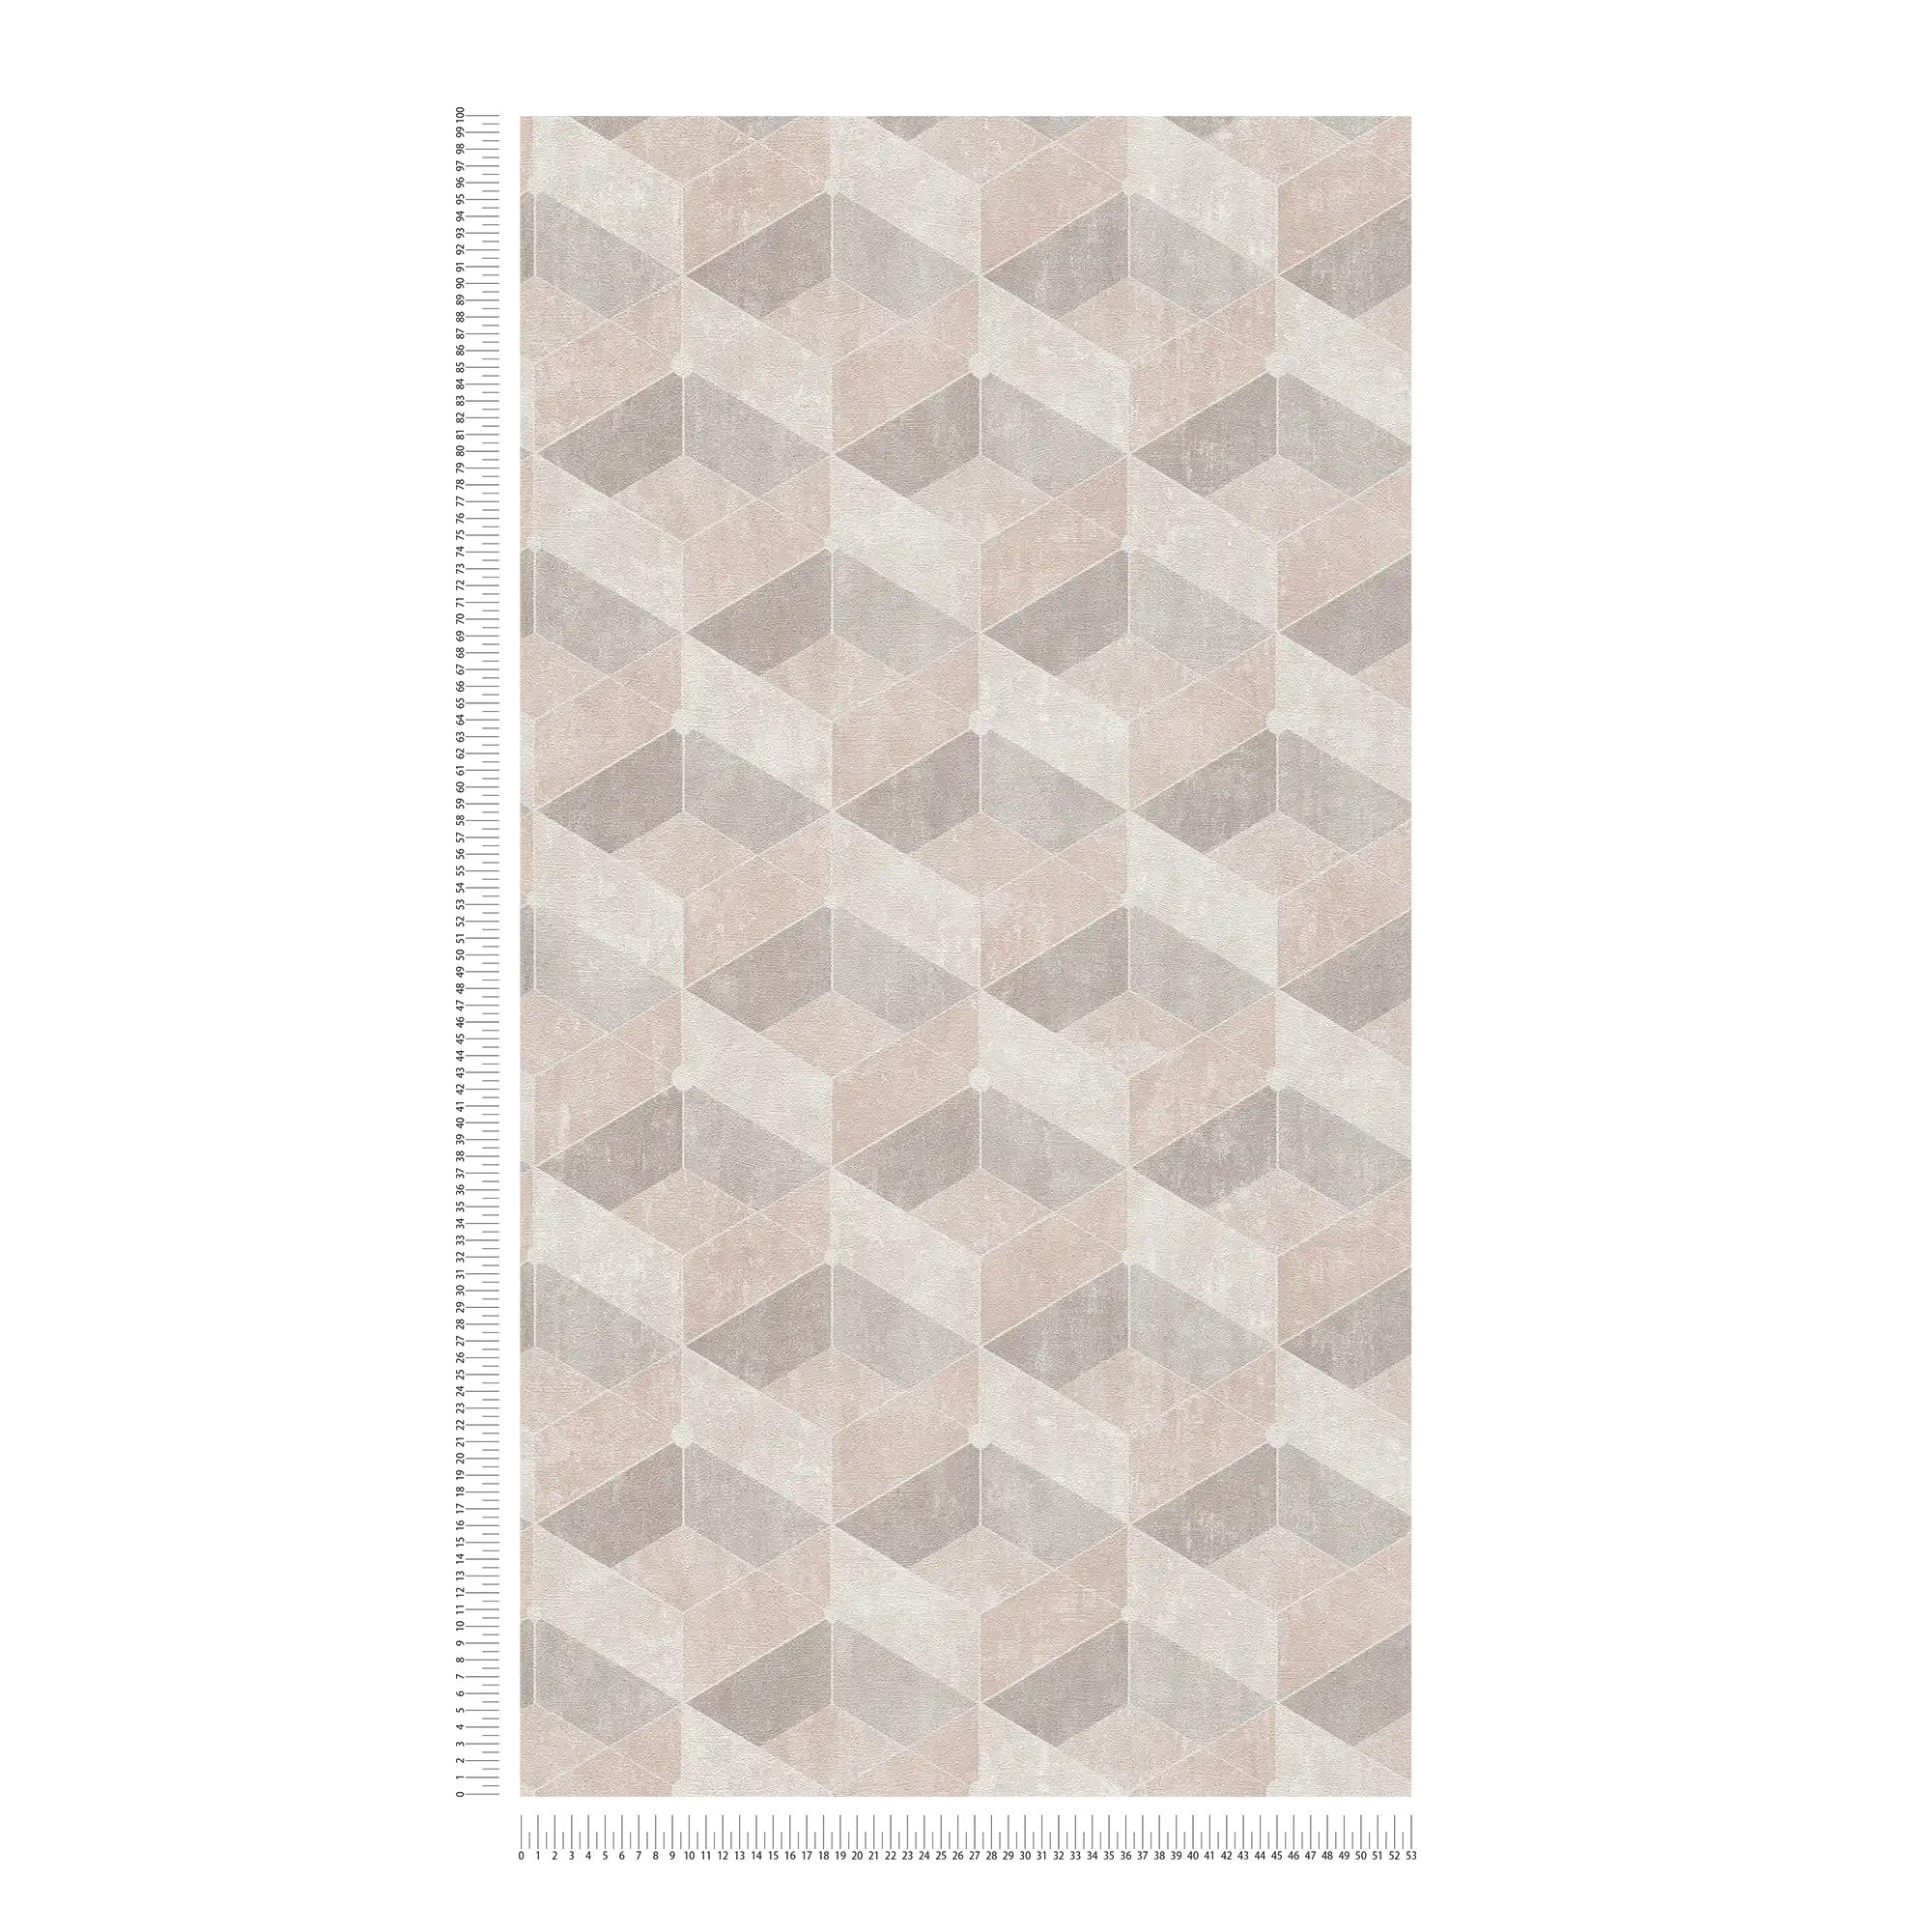             Pattern wallpaper diamonds in retro design - beige, brown, cream
        